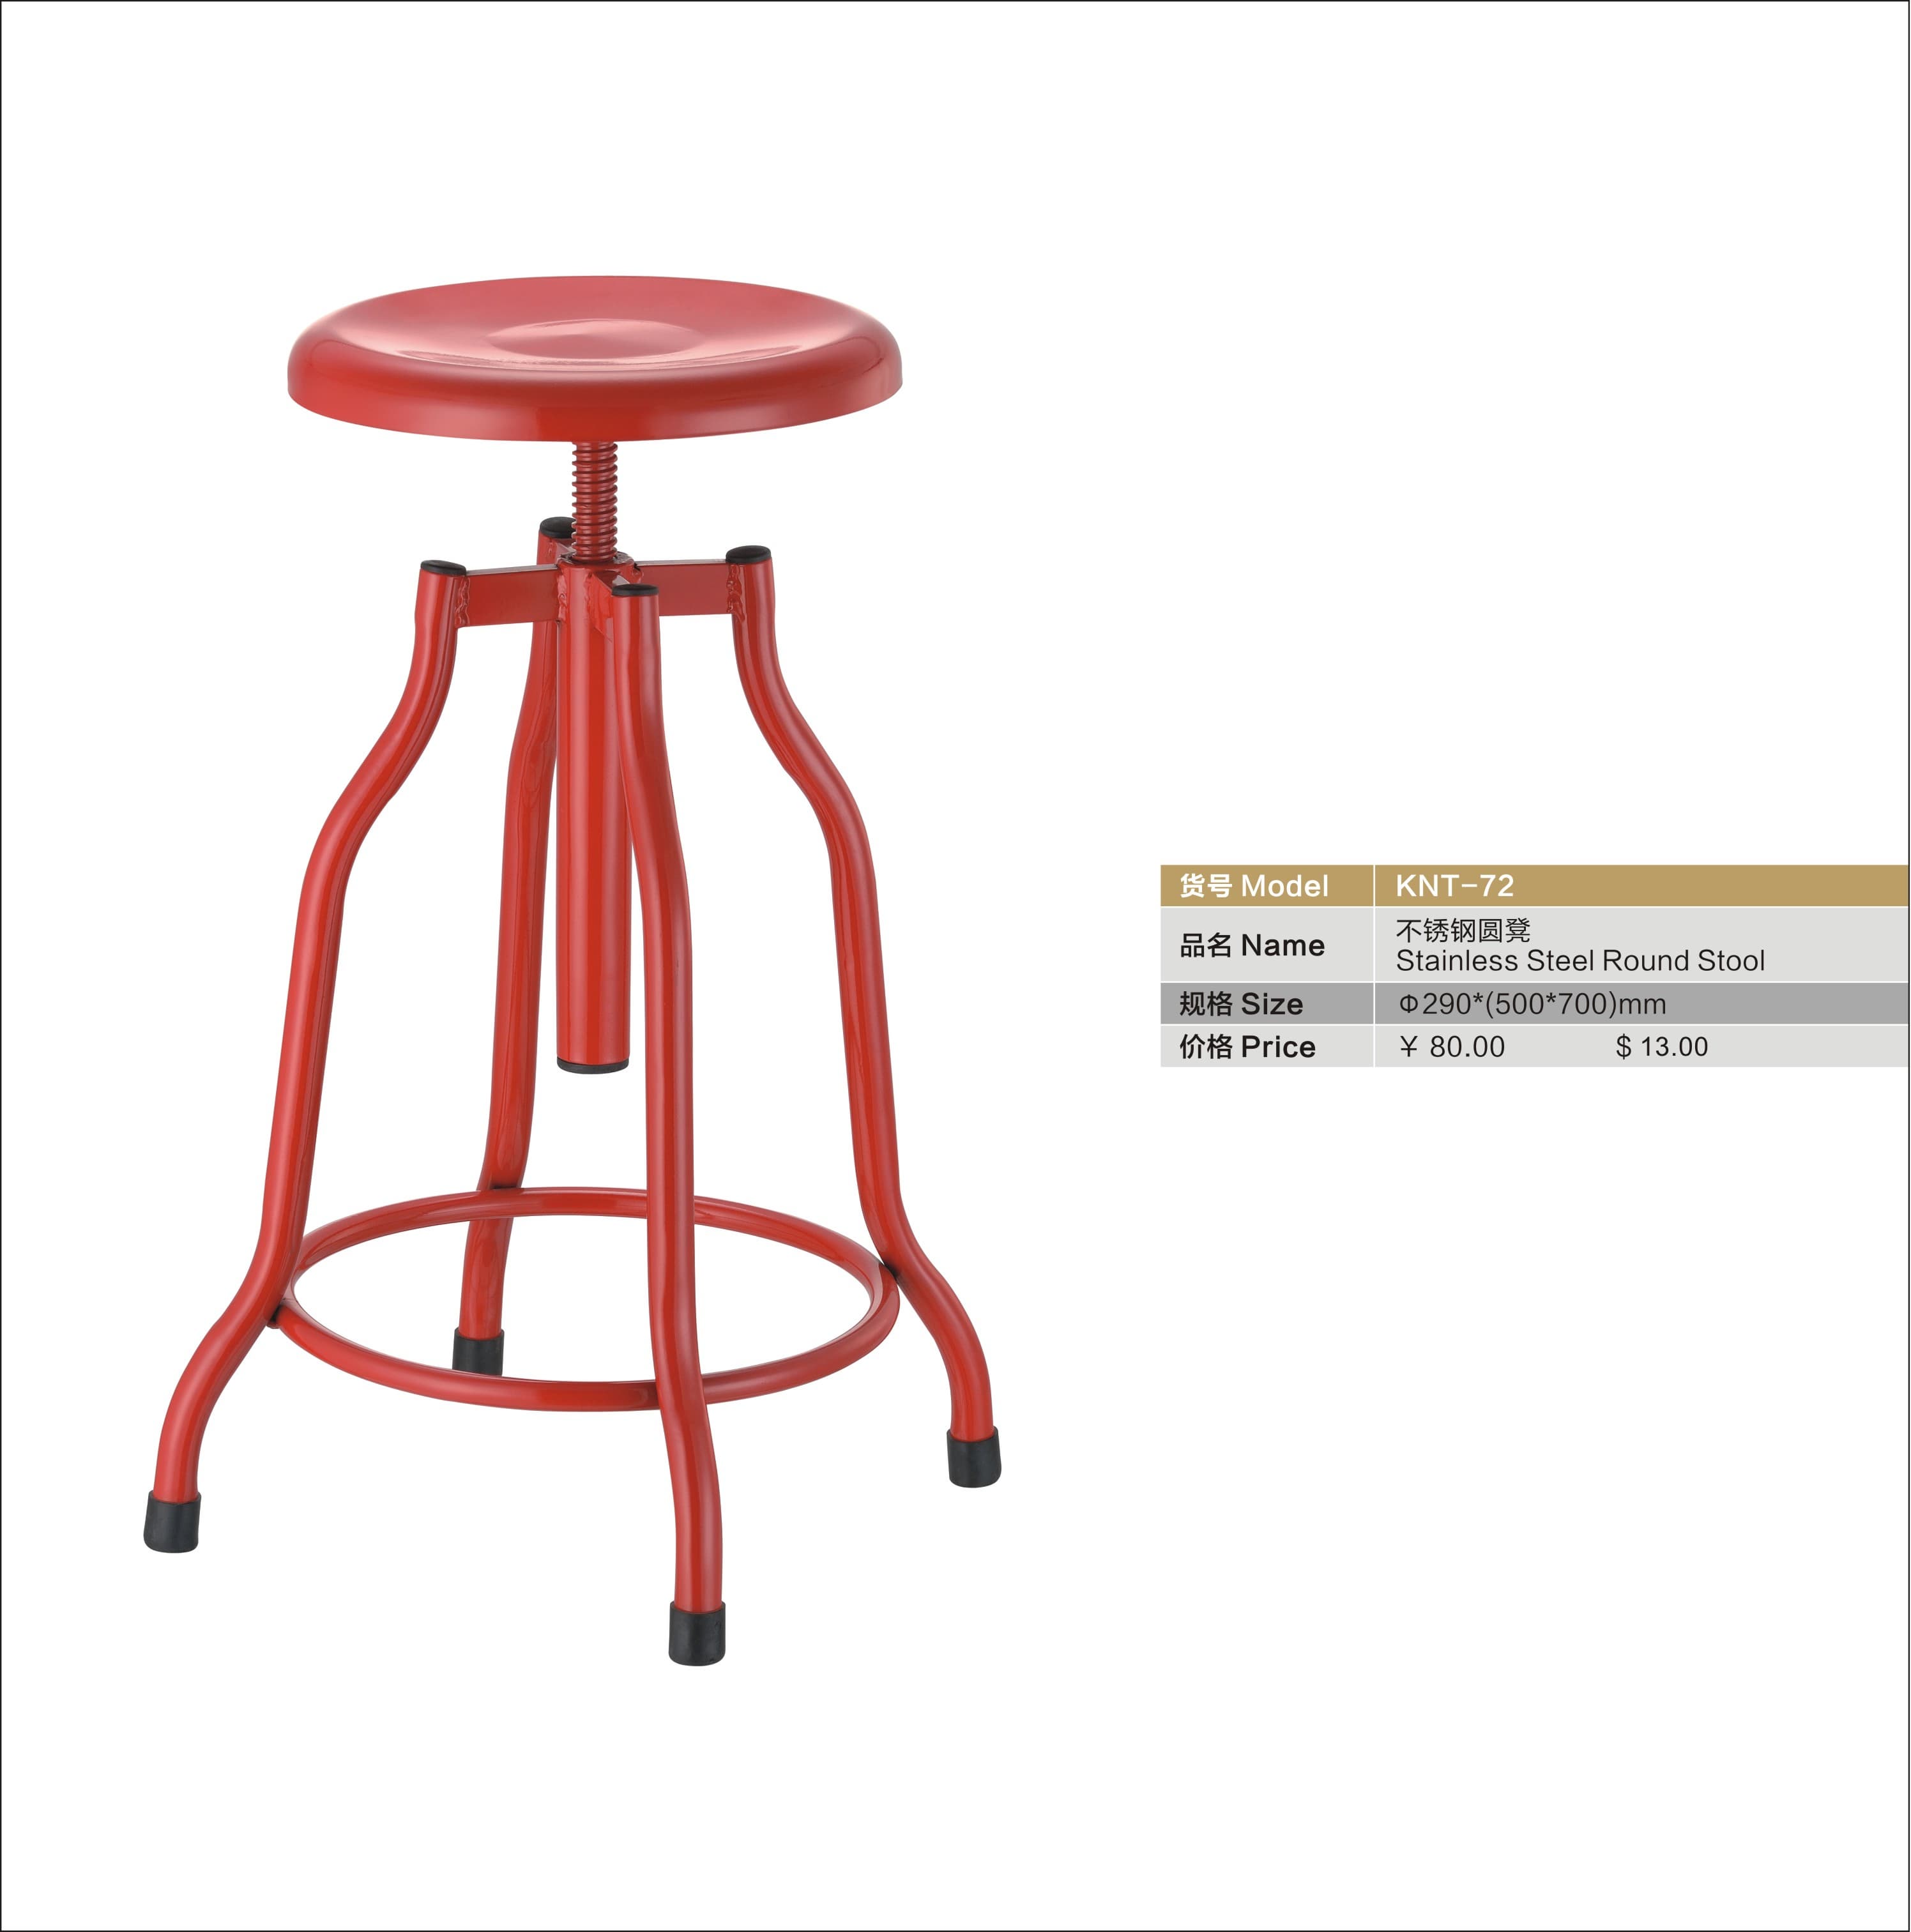 stainless steel revolving round stool